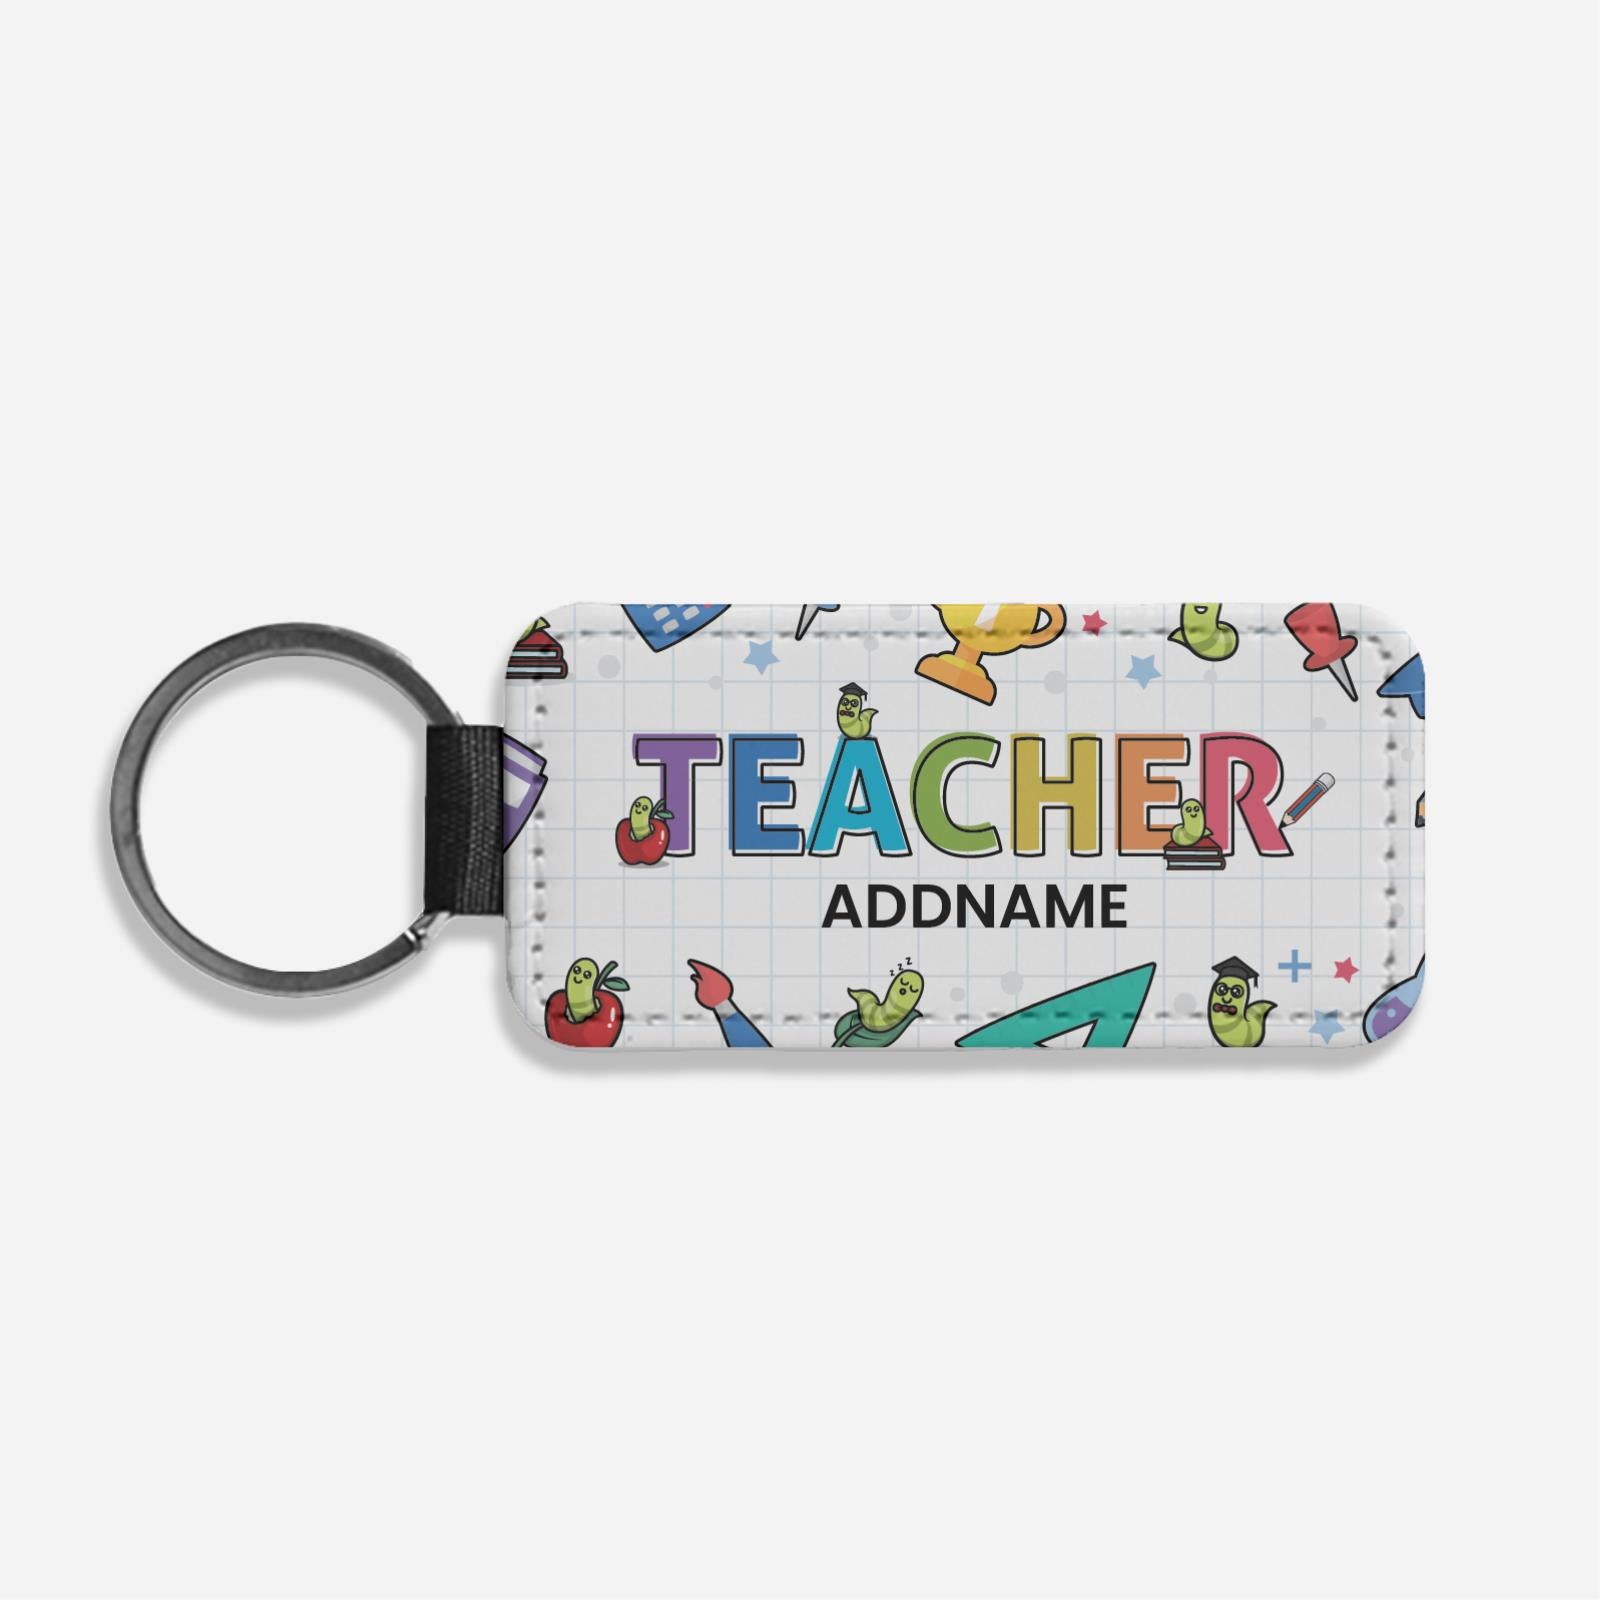 Teacher Addname - Classic Keychain